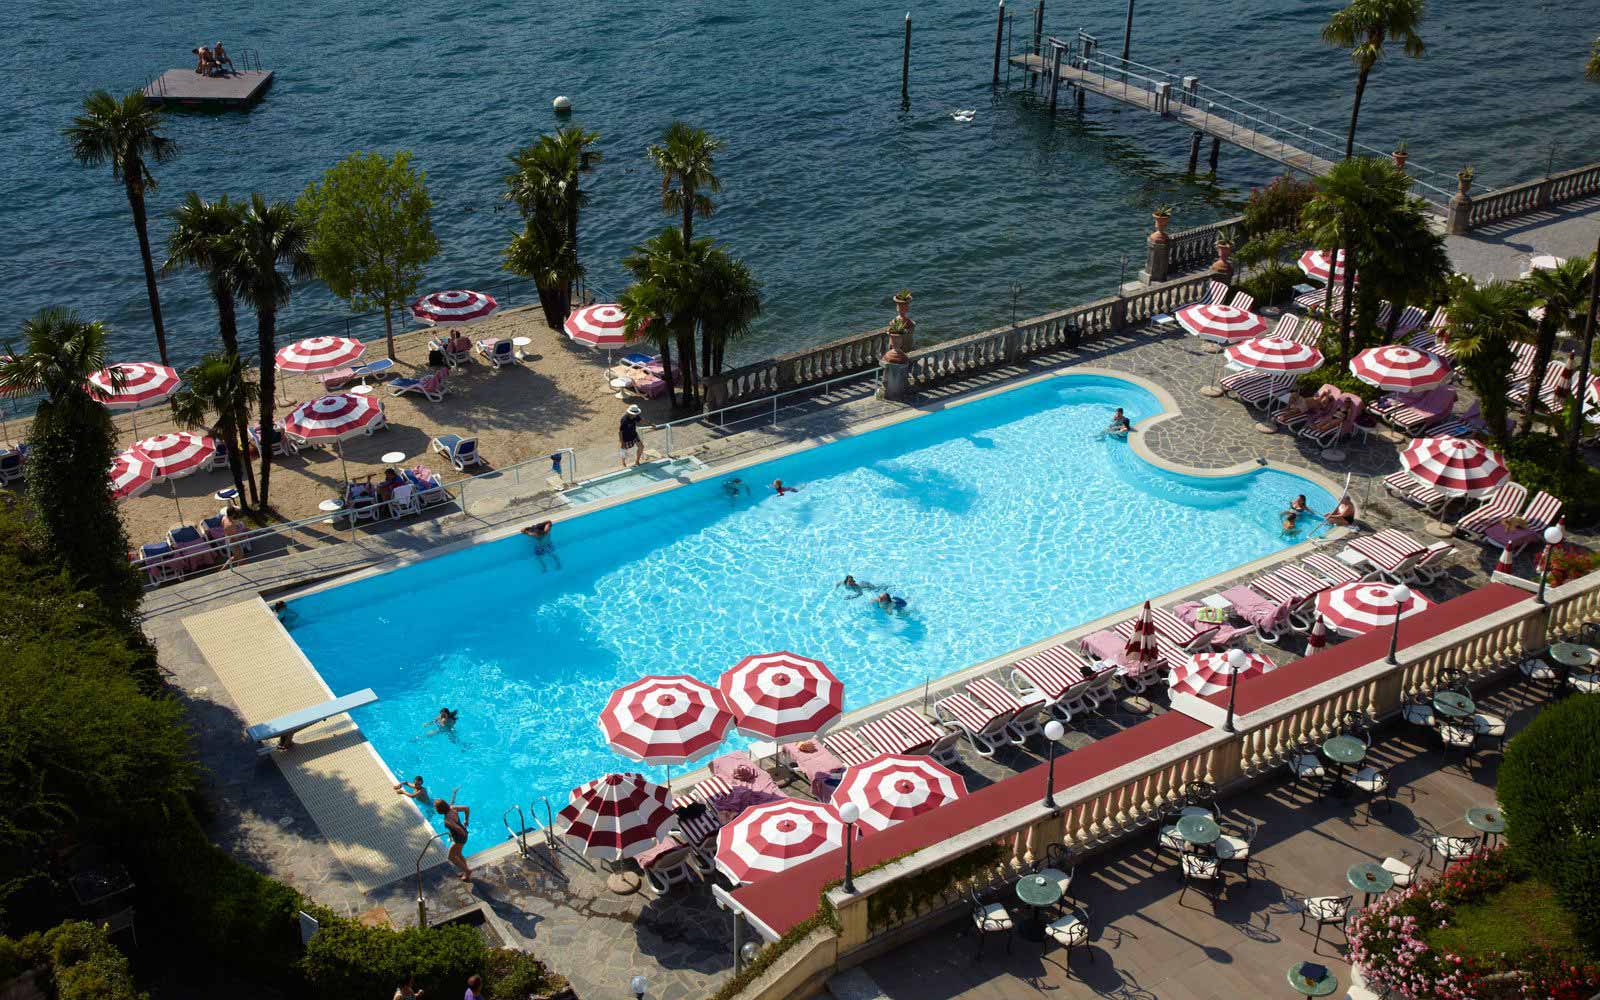 Swimming pool overlooking Lake Como at Grand Hotel Villa Serbelloni